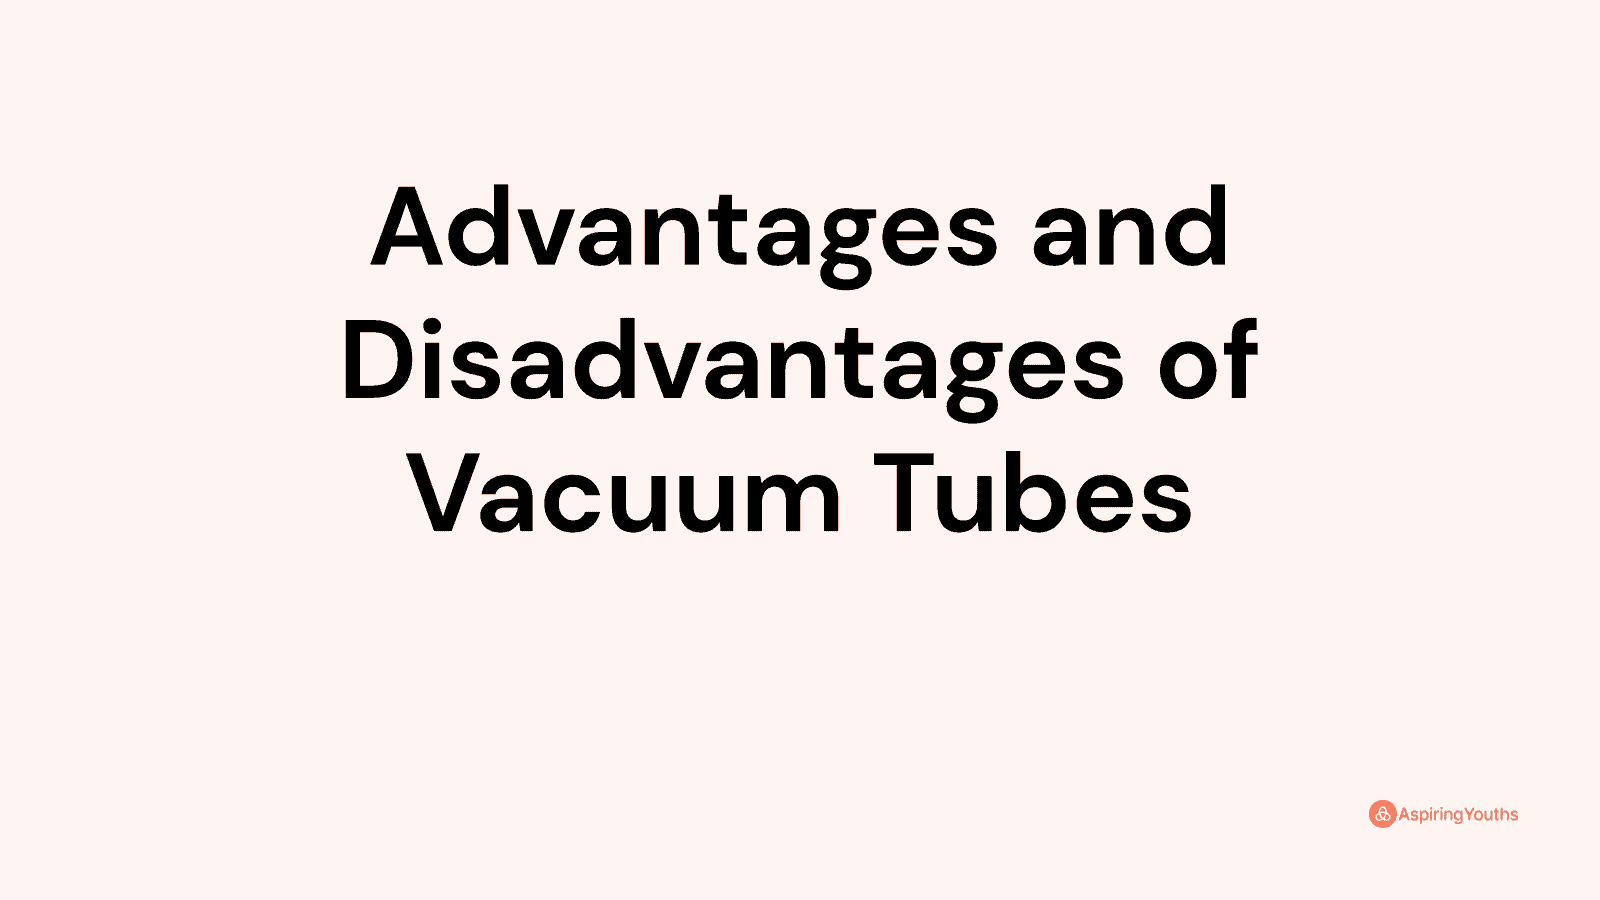 Advantages and disadvantages of Vacuum Tubes